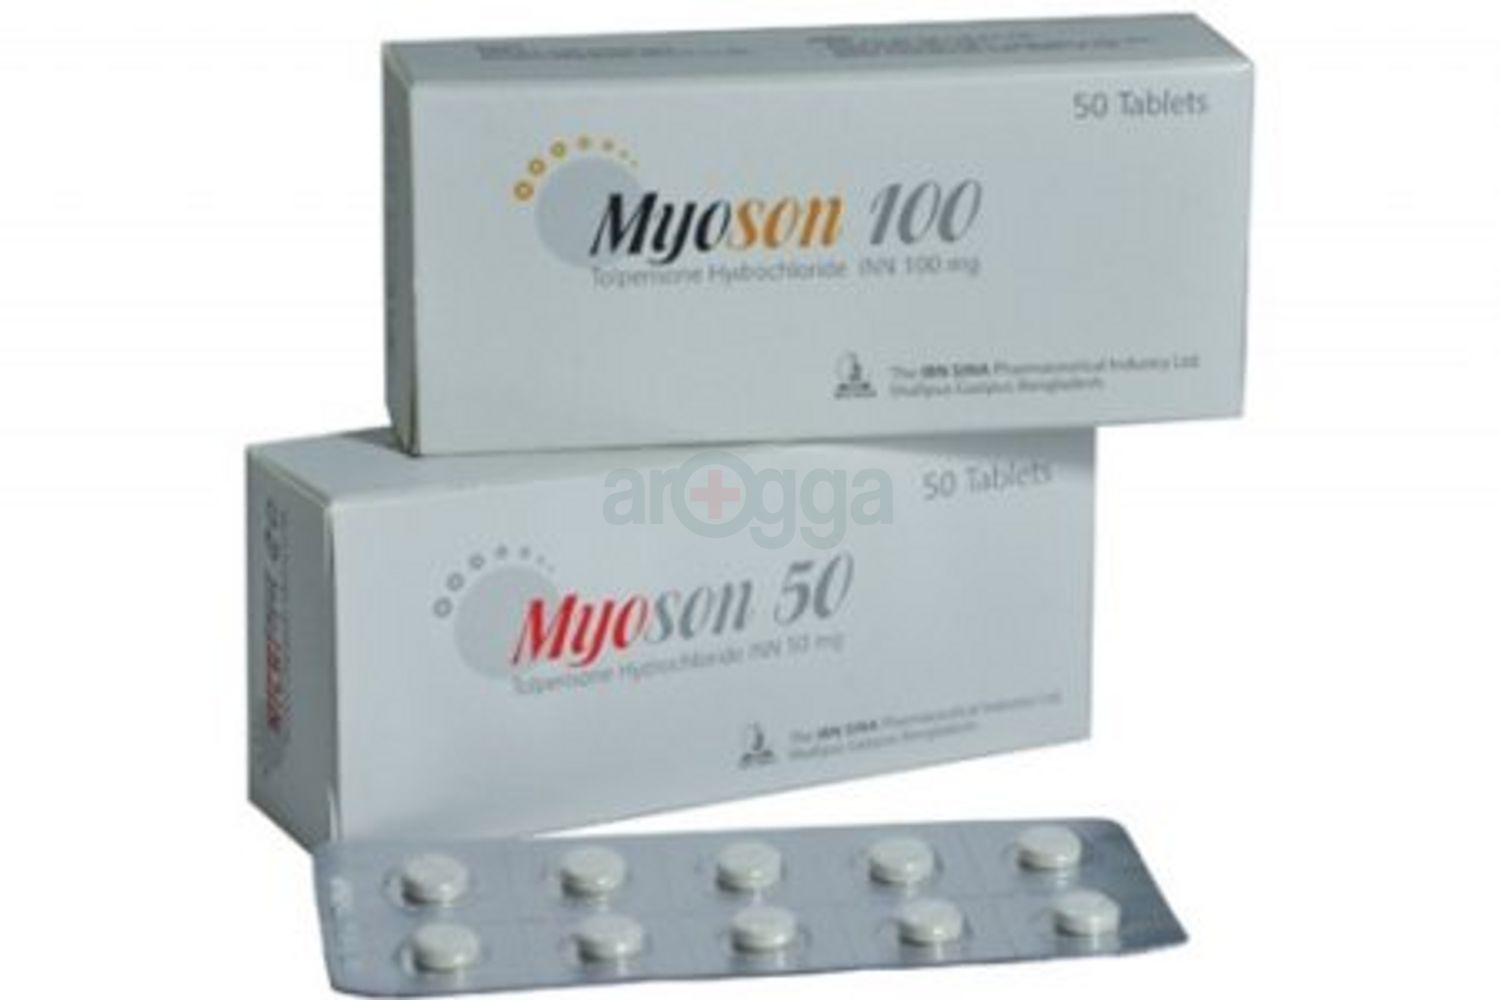 Myoson 100